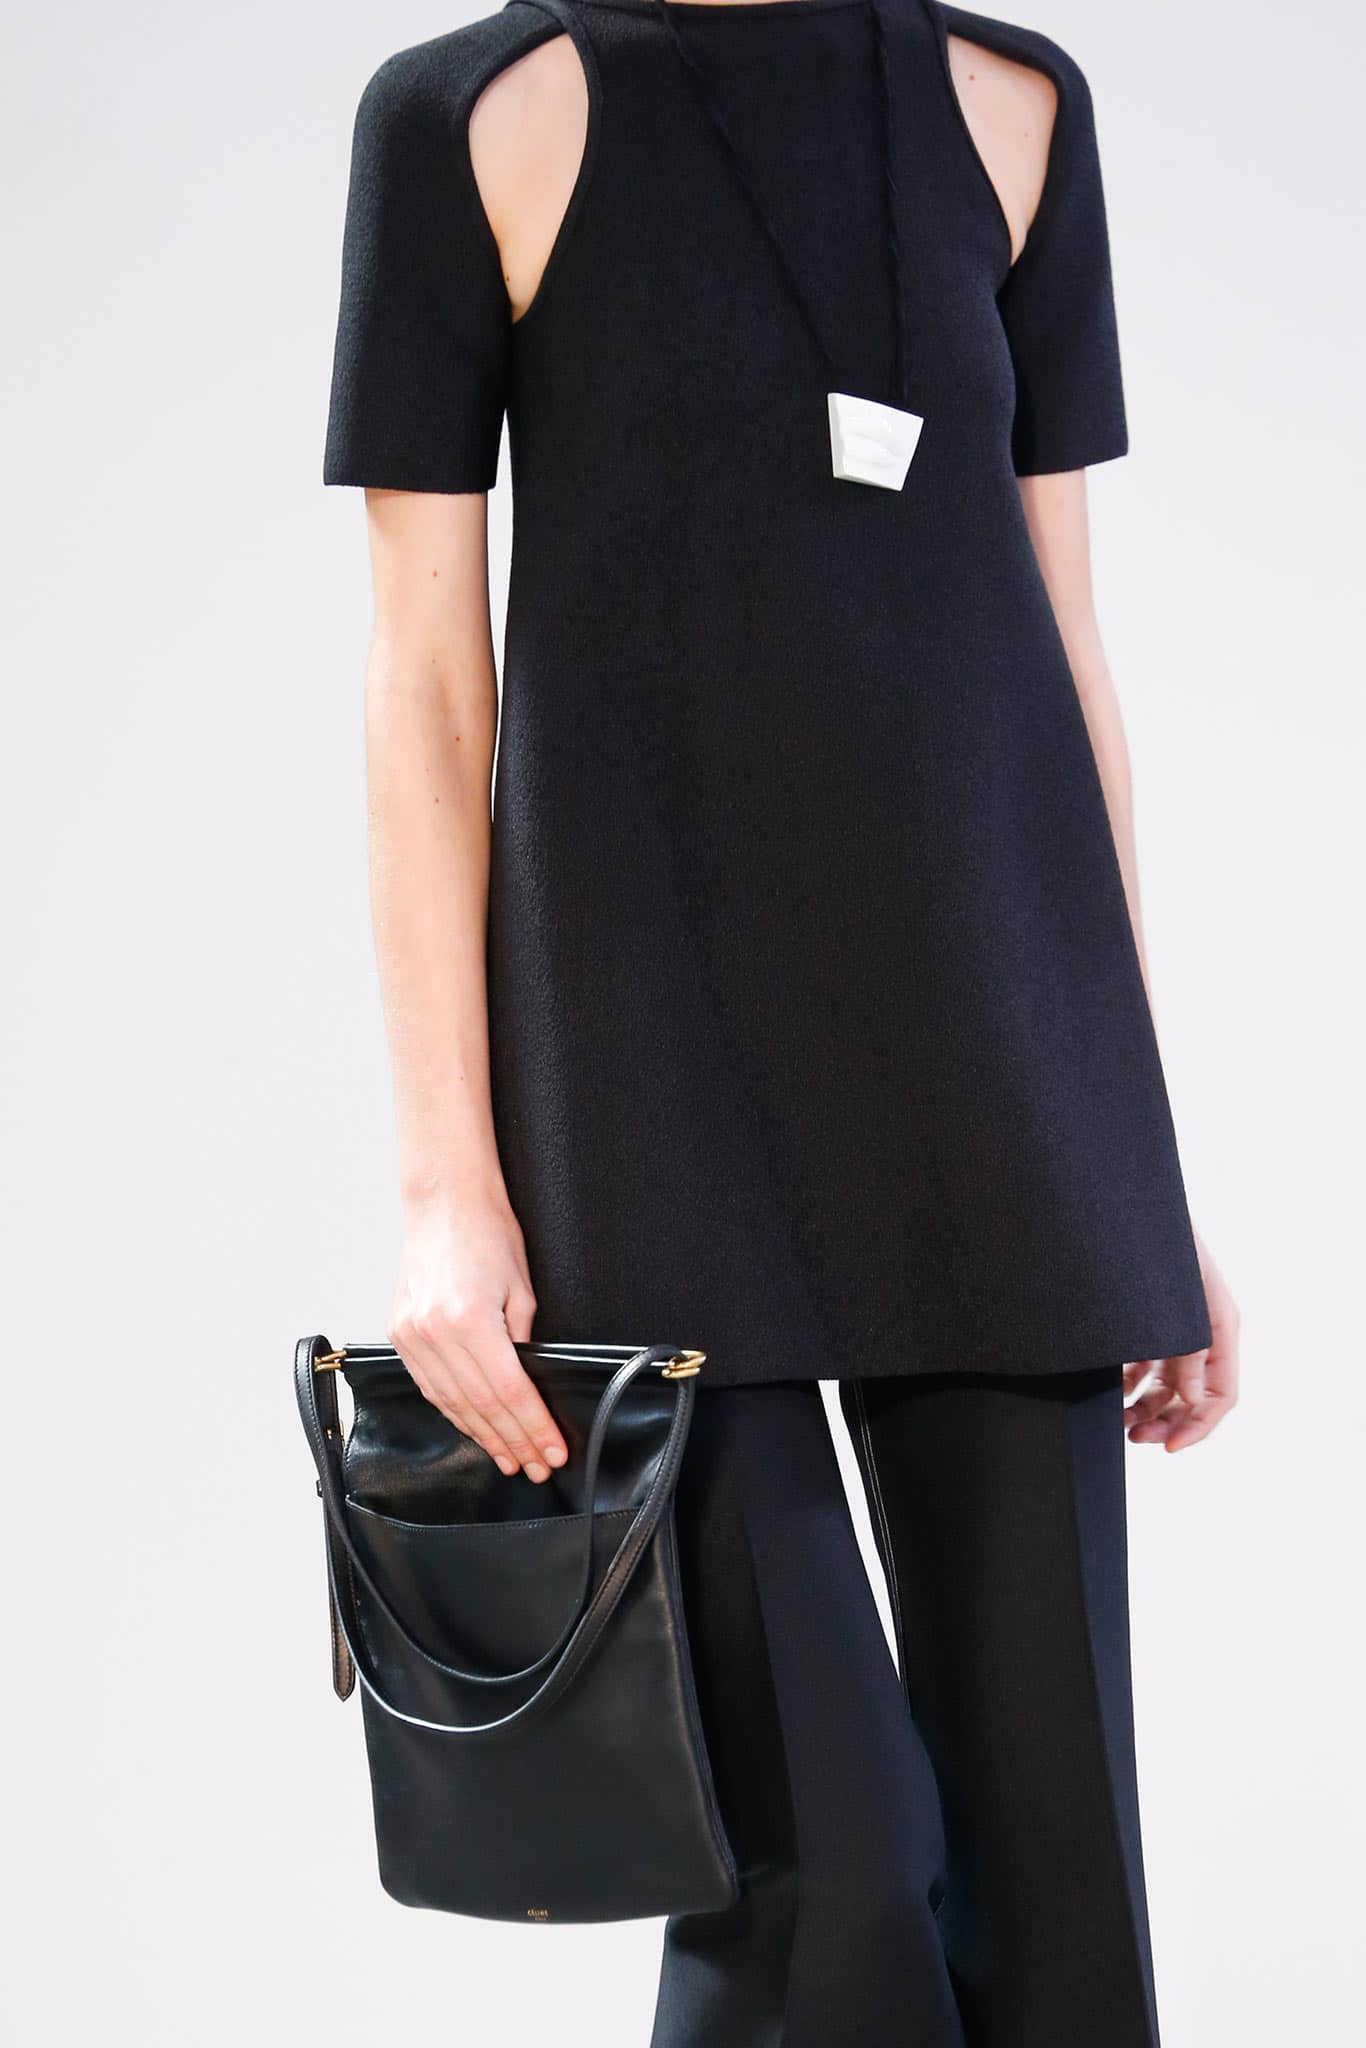 Celine Spring / Summer 2015 Runway Bag Collection | Spotted Fashion  